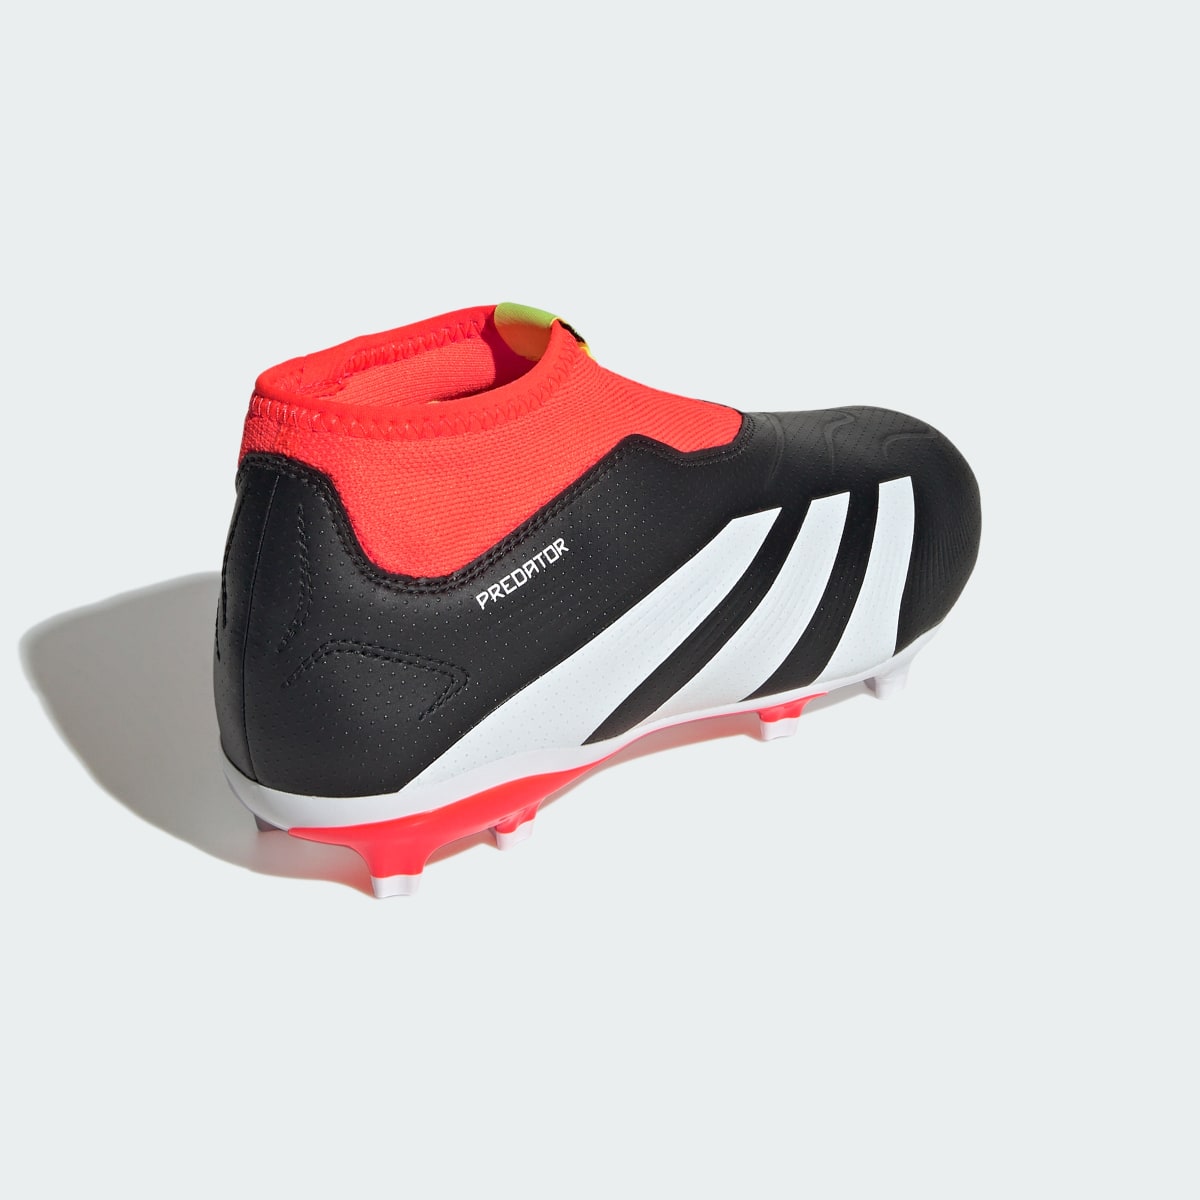 Adidas Calzado de fútbol Predator 24 League Terreno Firme Sin Cordones. 6